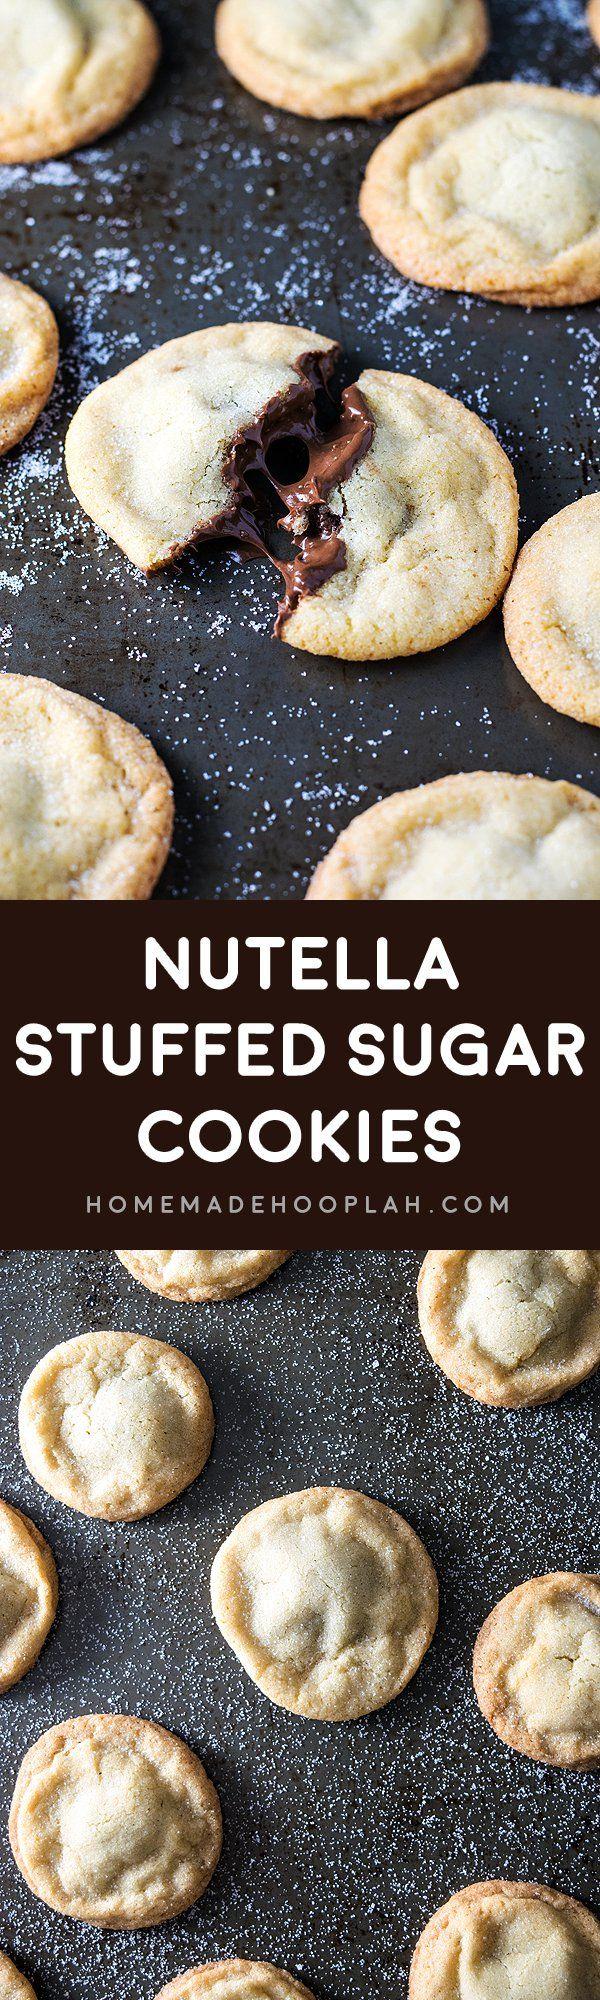 Wedding - Nutella Stuffed Sugar Cookies